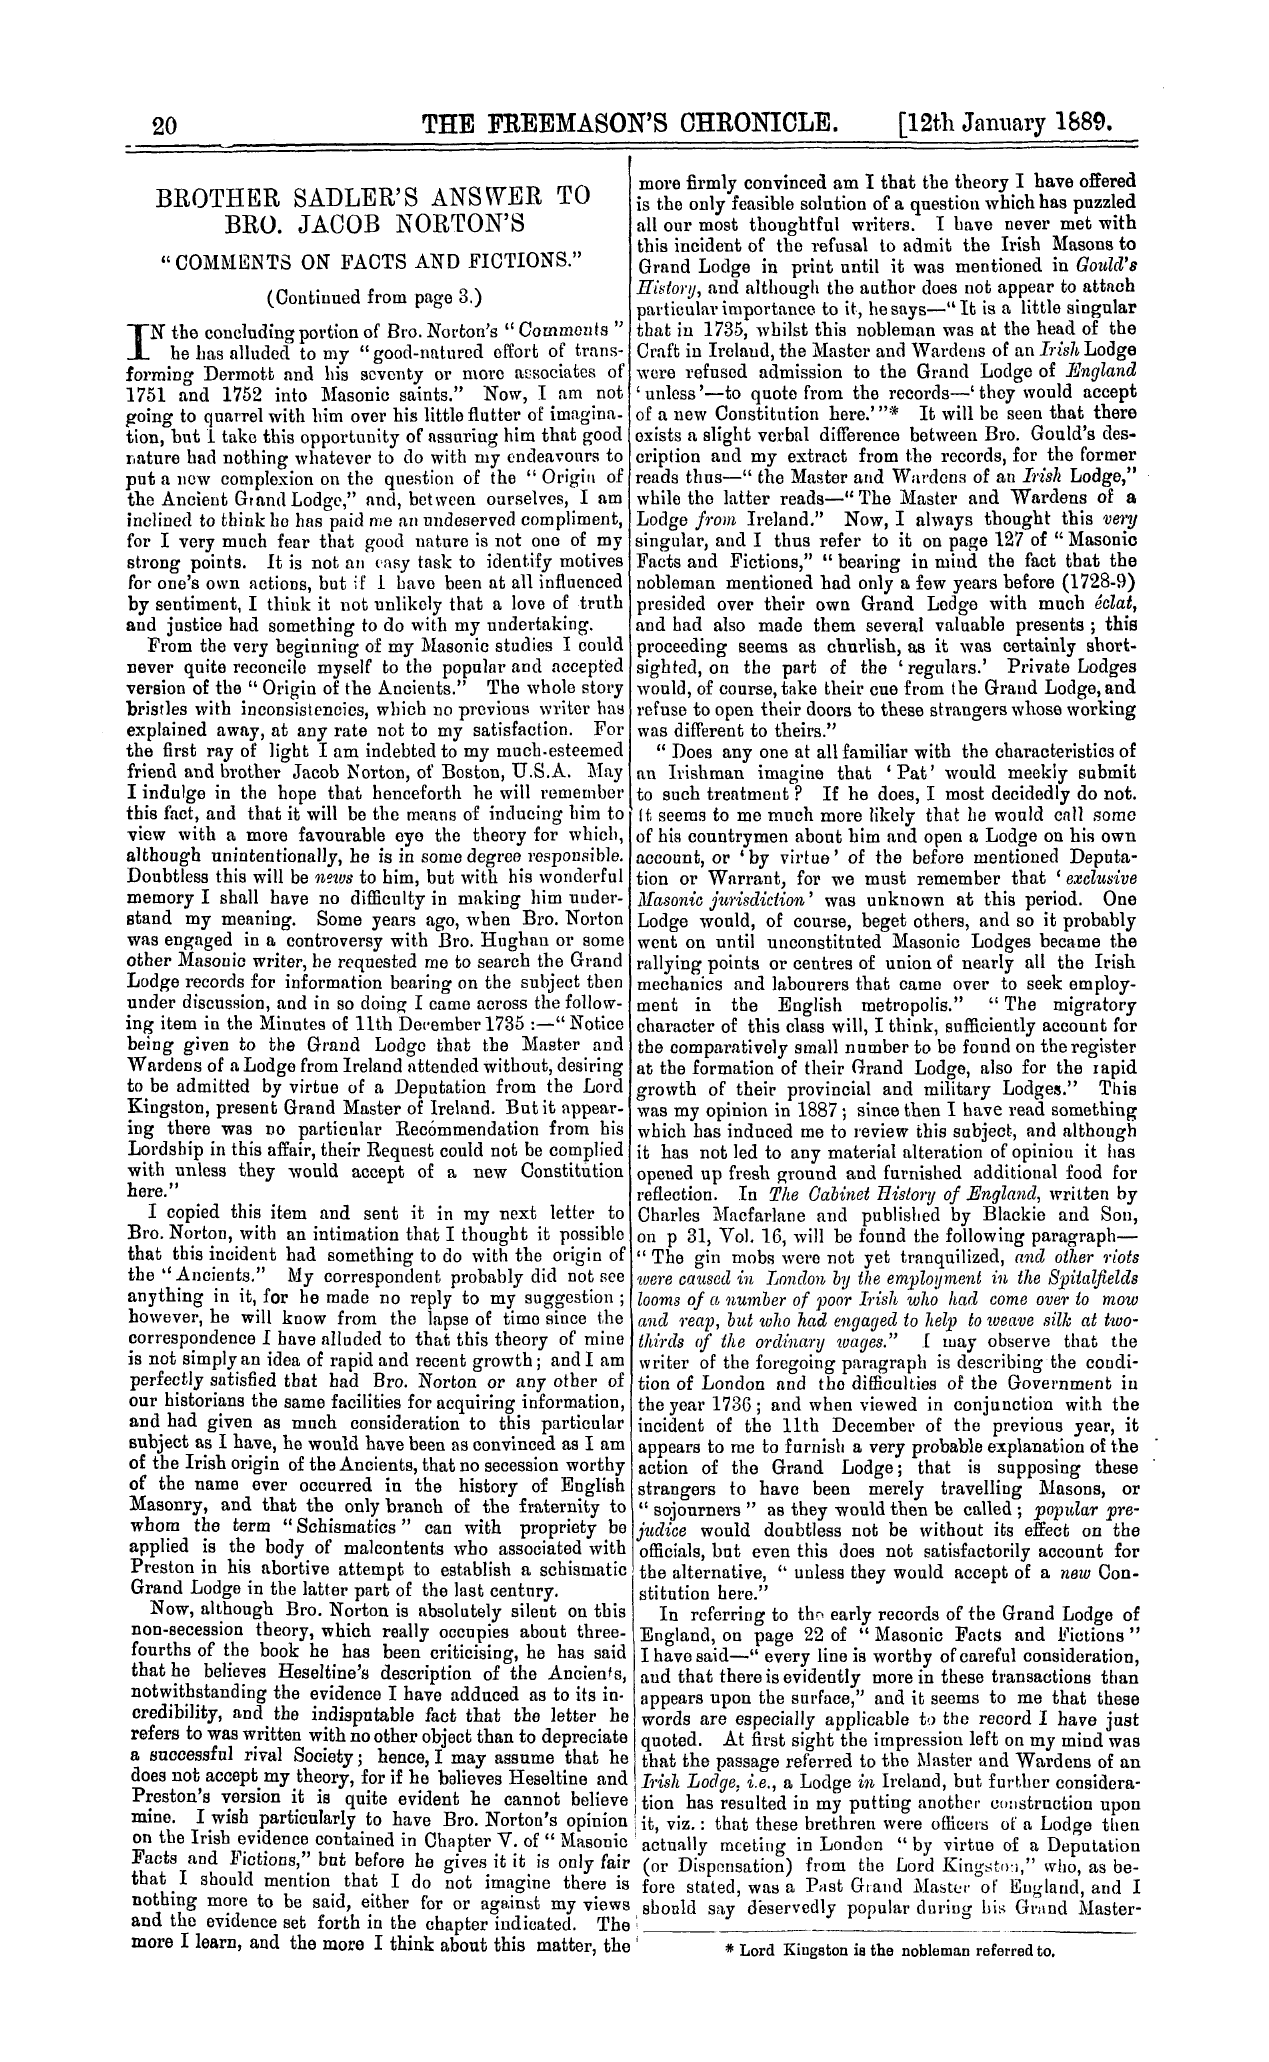 The Freemason's Chronicle: 1889-01-12 - Brother Sadler's Answer To Bro. Jacob Norton's